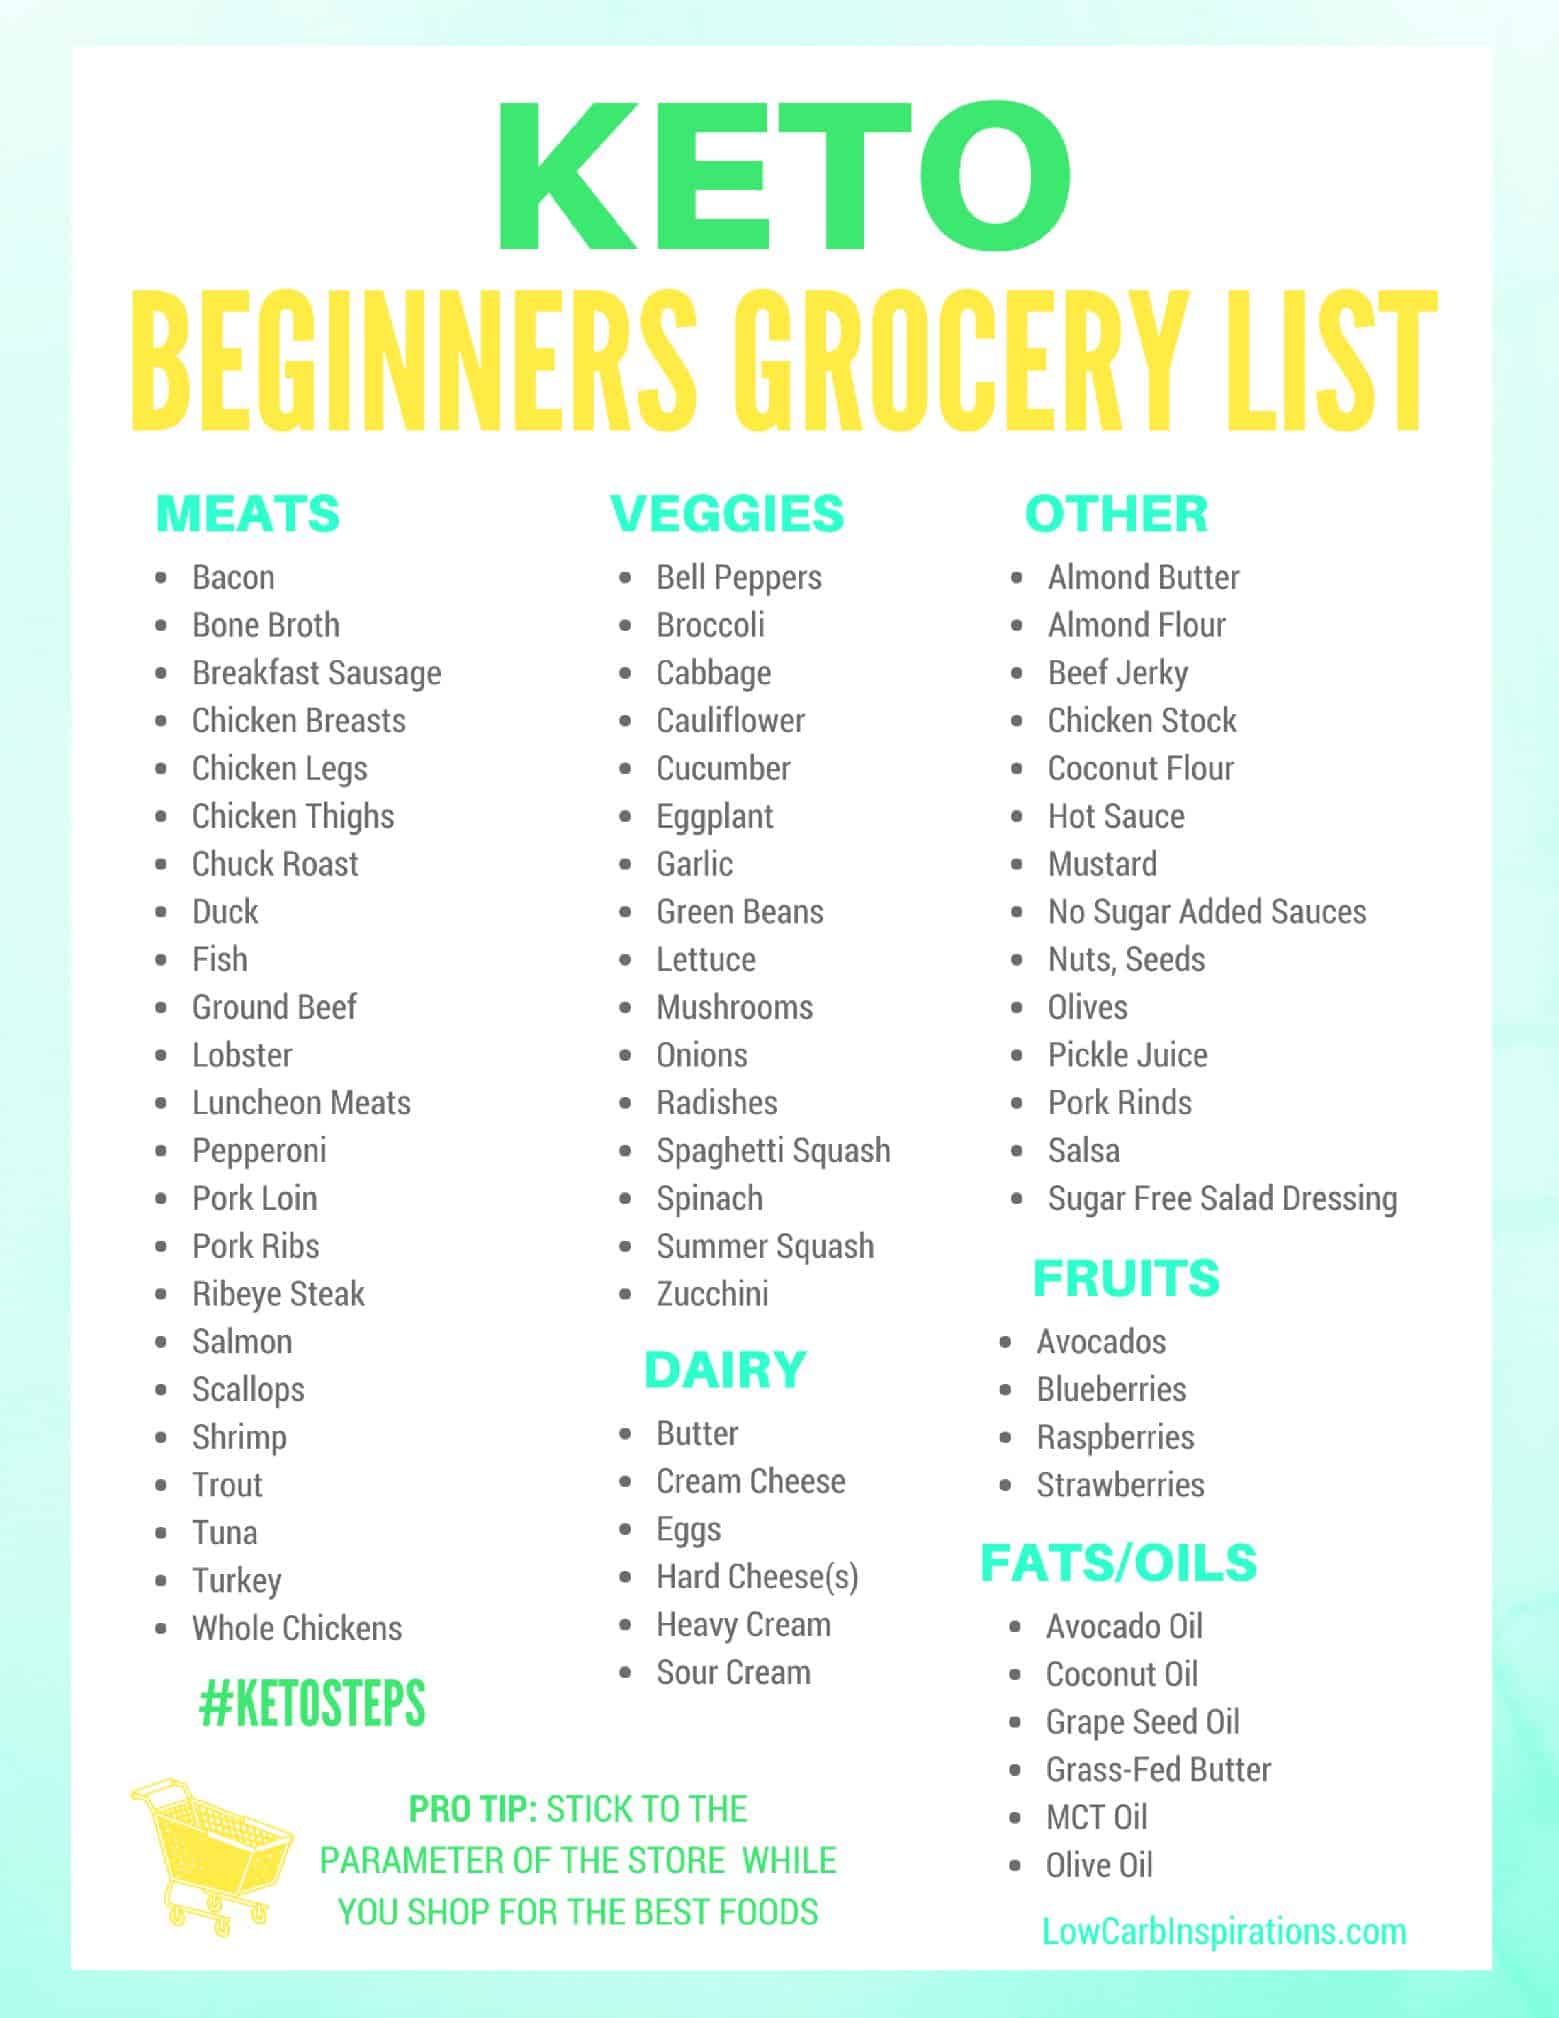 keto-grocery-list-for-beginners-isavea2z